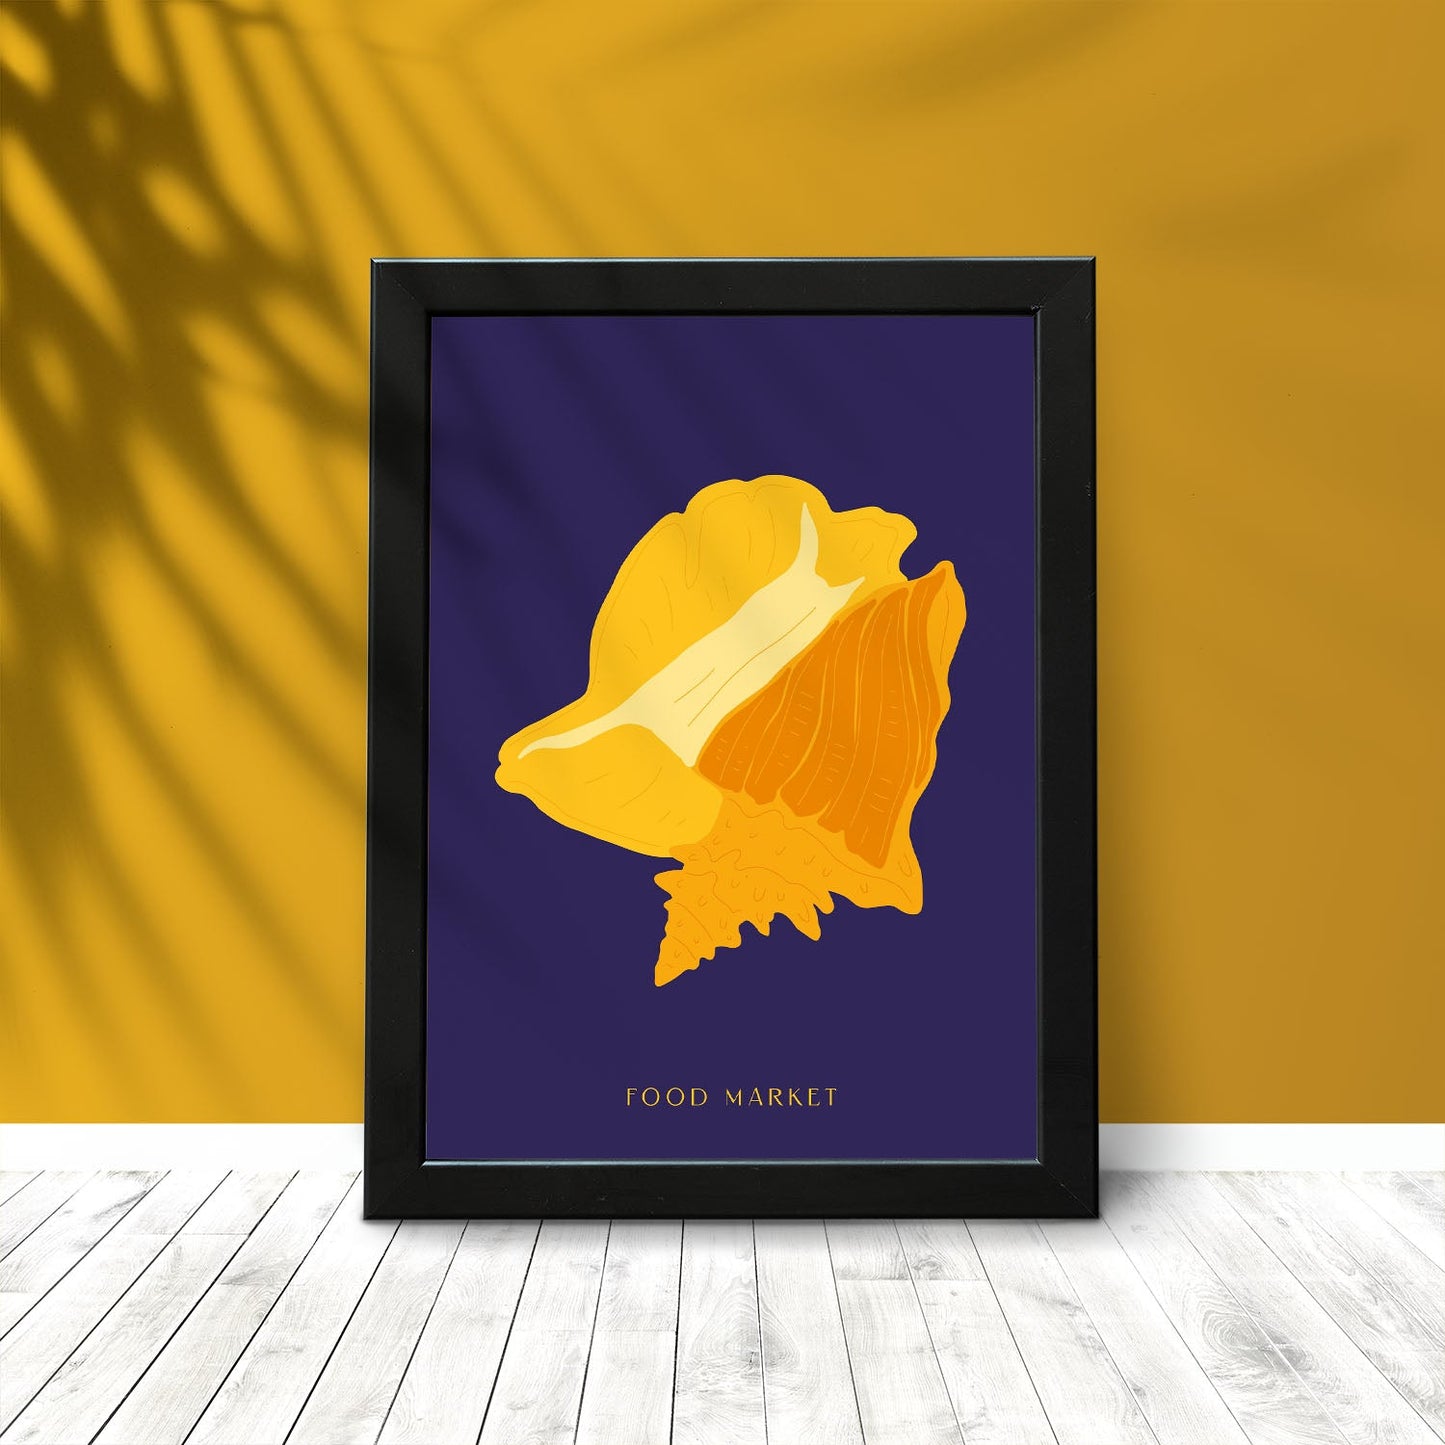 Queen Conch Snail-Artwork-Nacnic-Nacnic Estudio SL